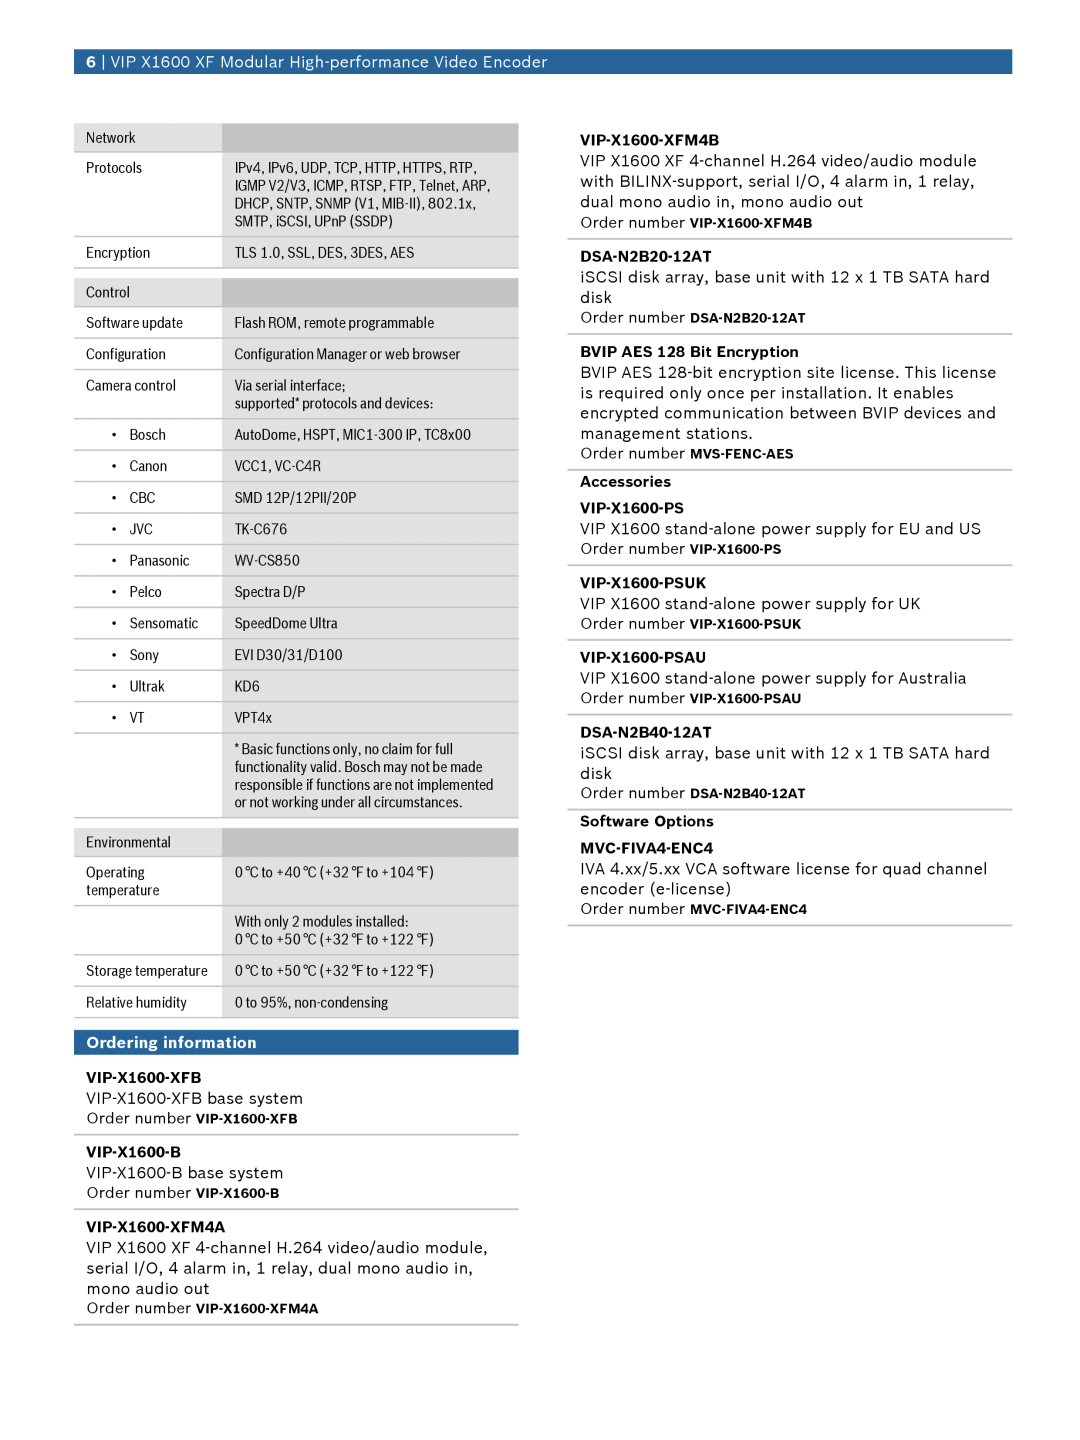 Bosch Appliances XF, VIP, X1600 manual Ordering information 